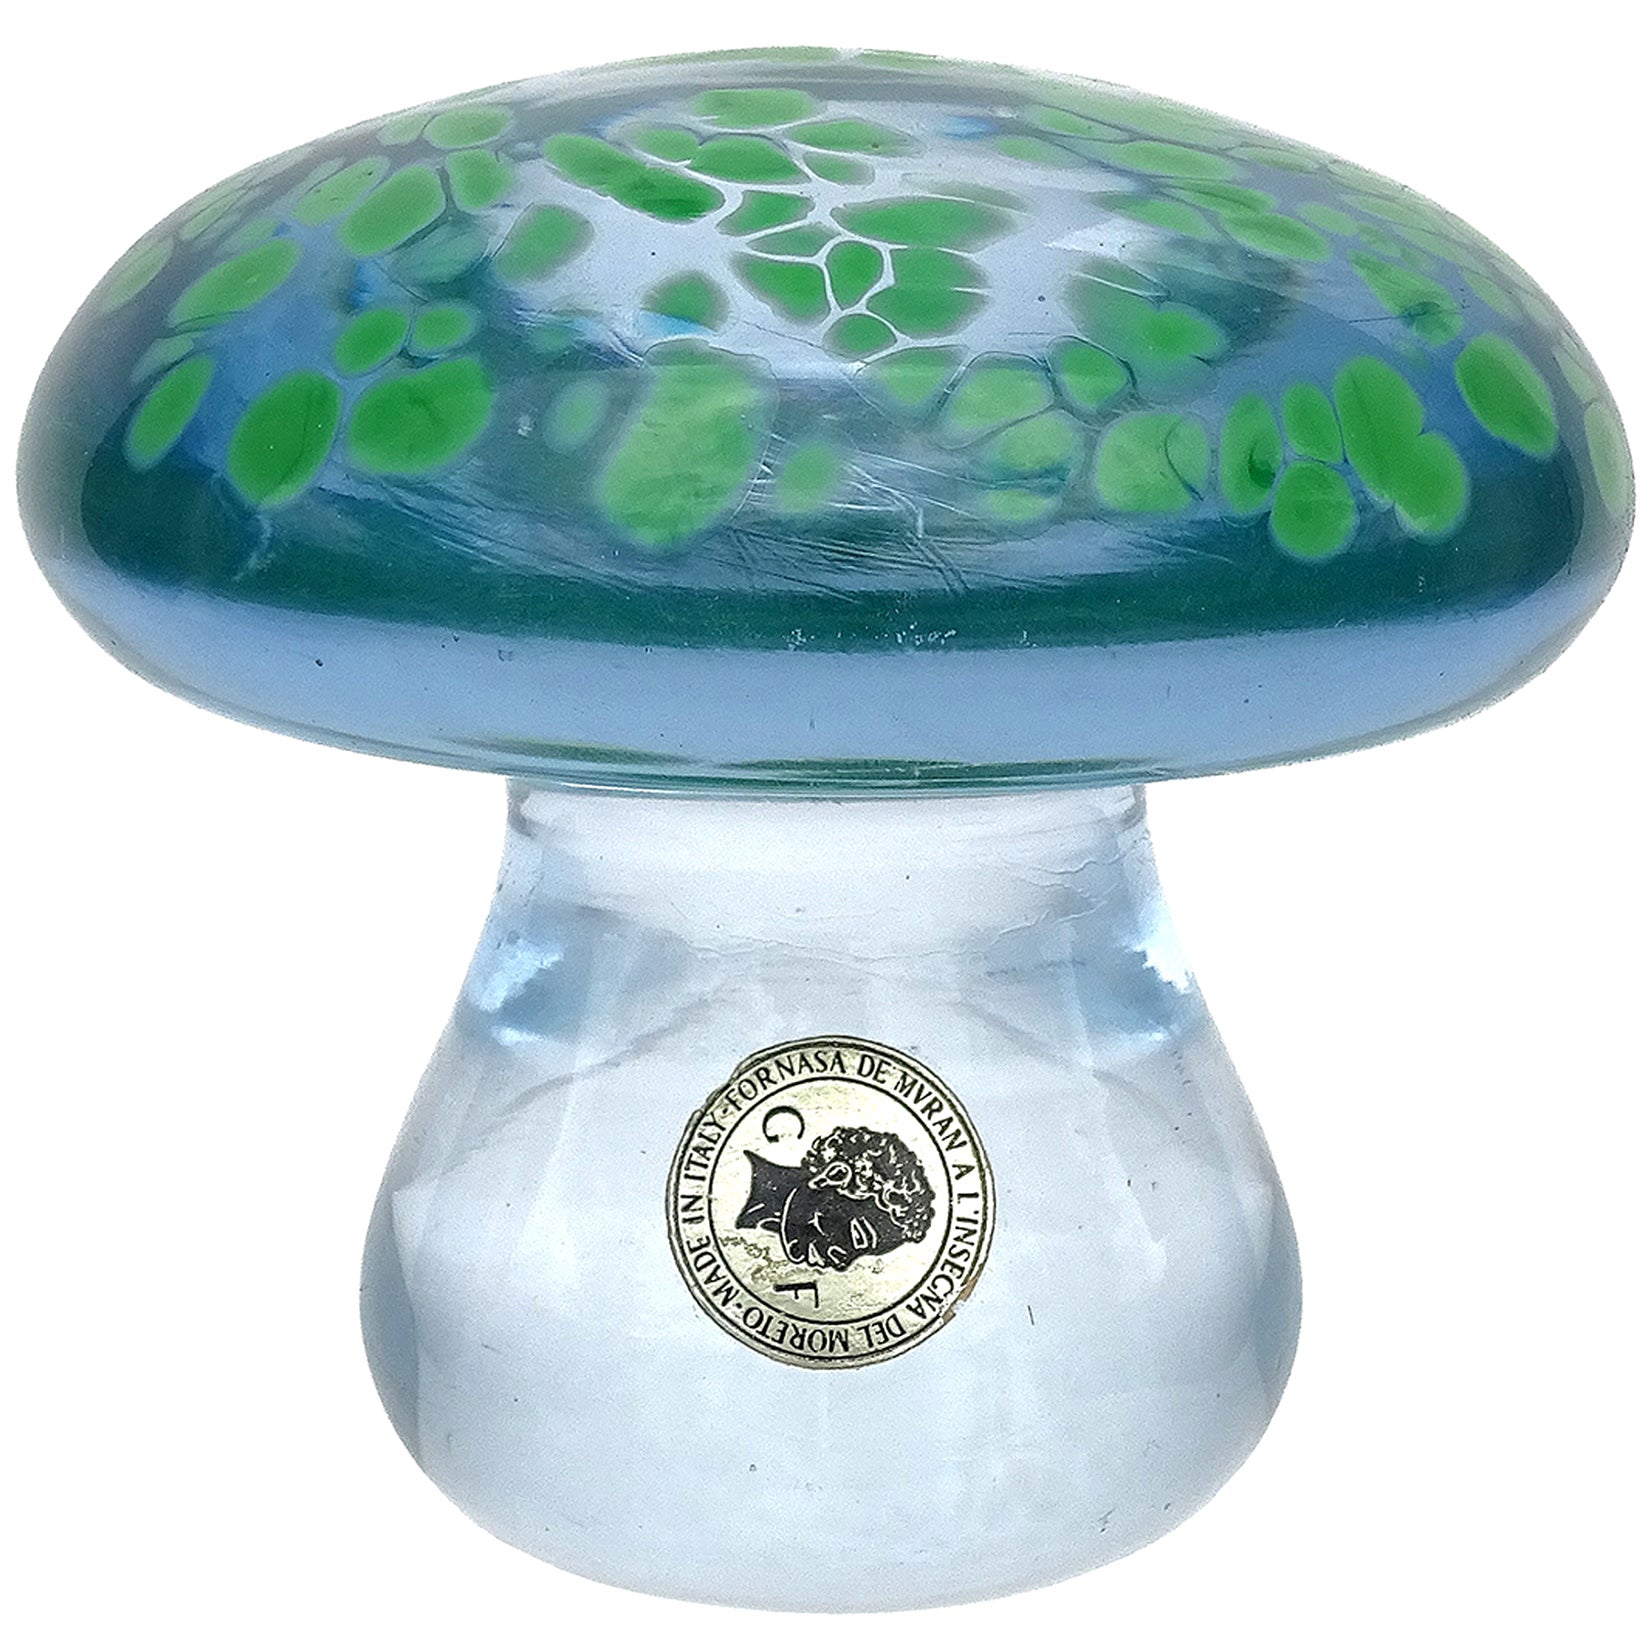 Sculpture en verre d'art italien de Murano bleu vert, presse-papier champignon toadstool champignon en vente